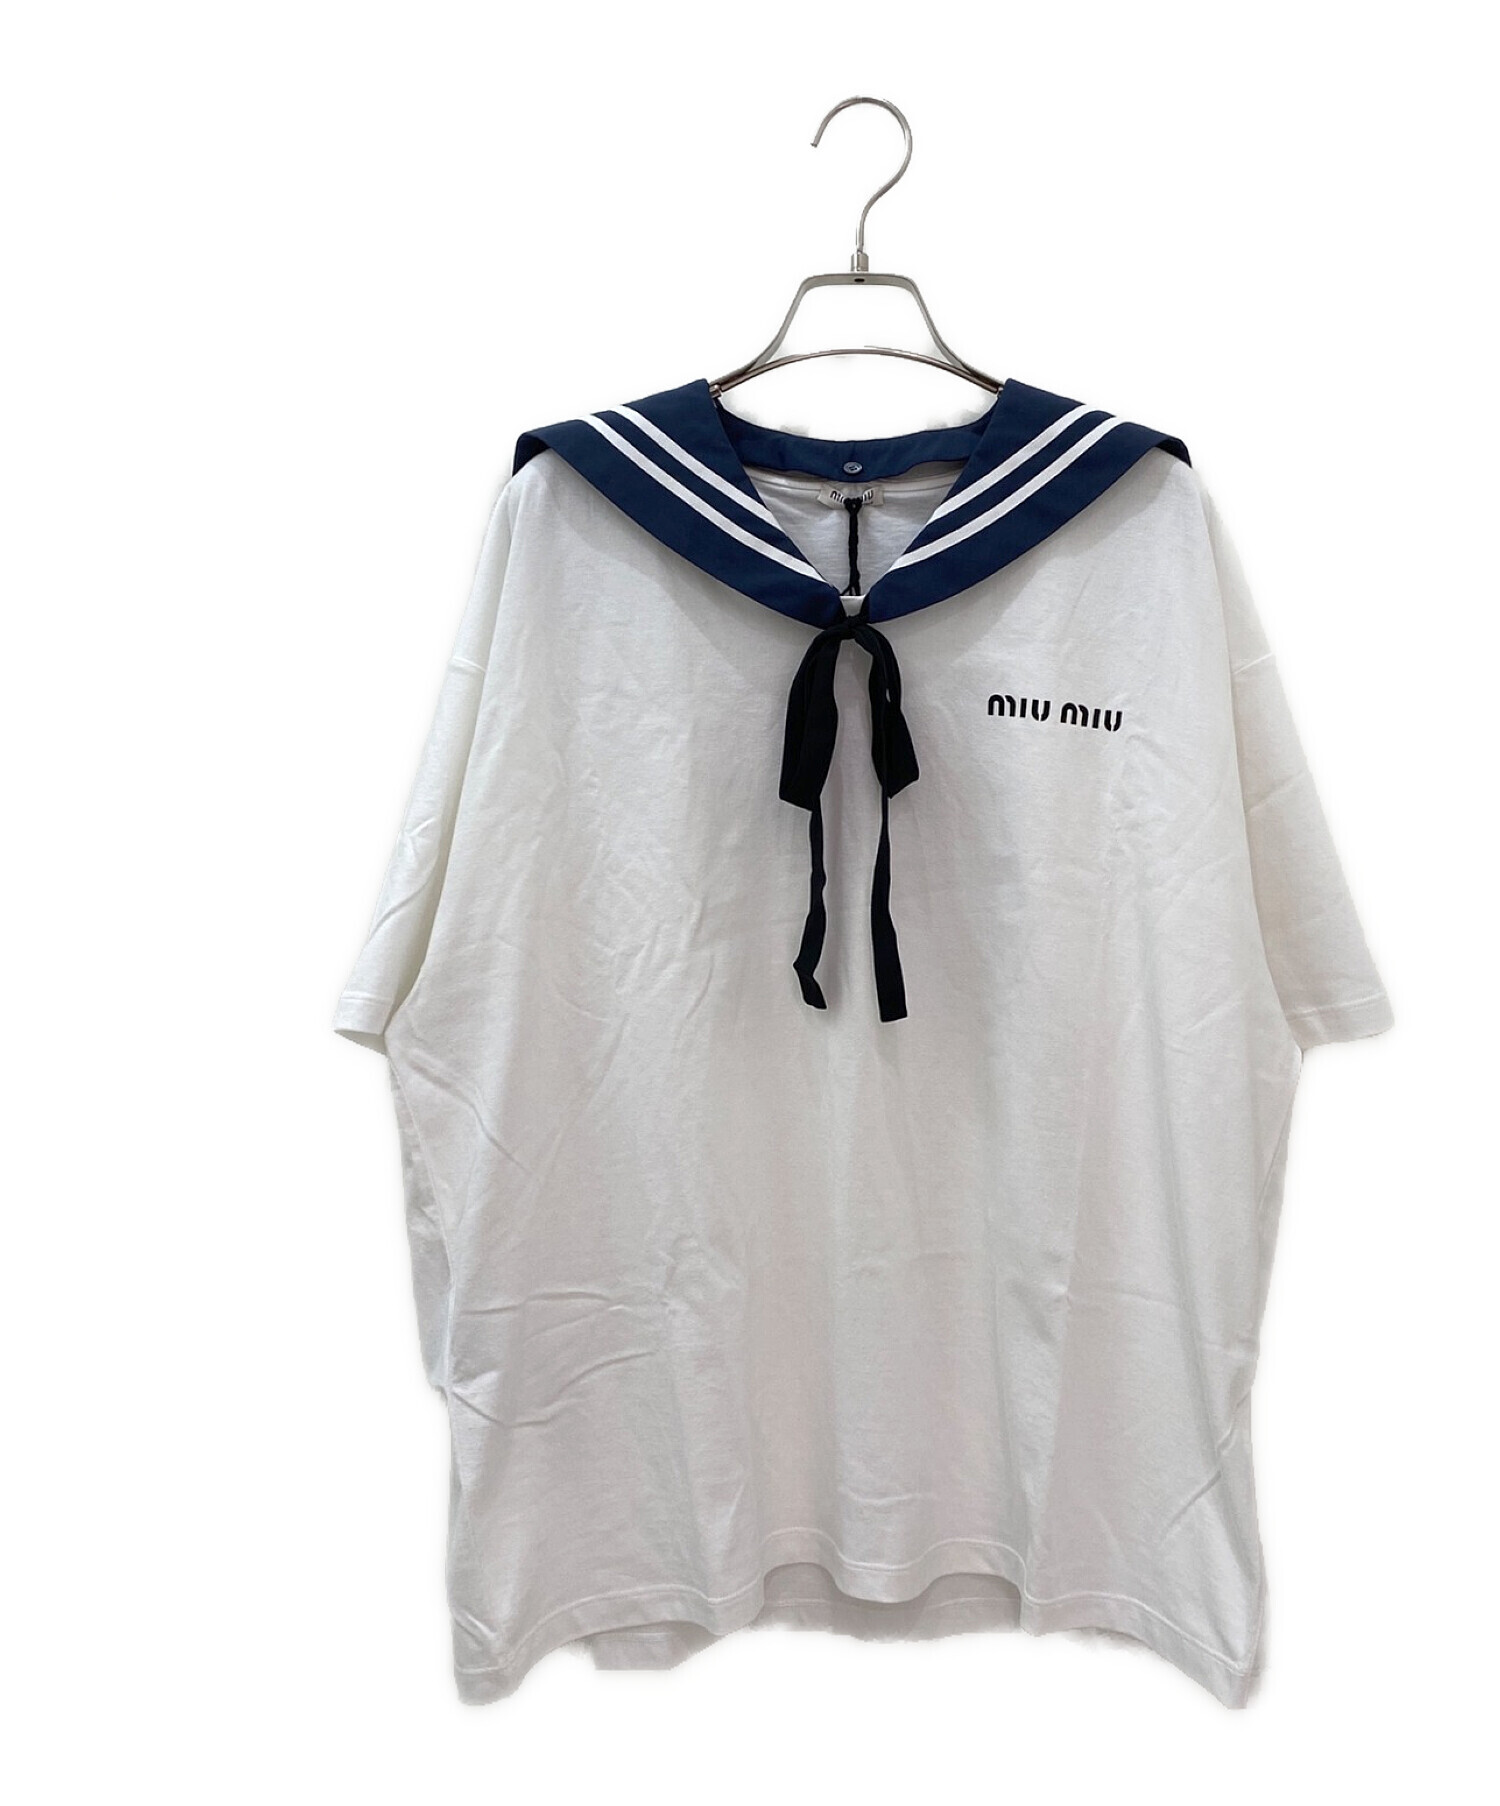 MIU MIU (ミュウミュウ) Printed cotton jersey T-shirt ホワイト サイズ:S